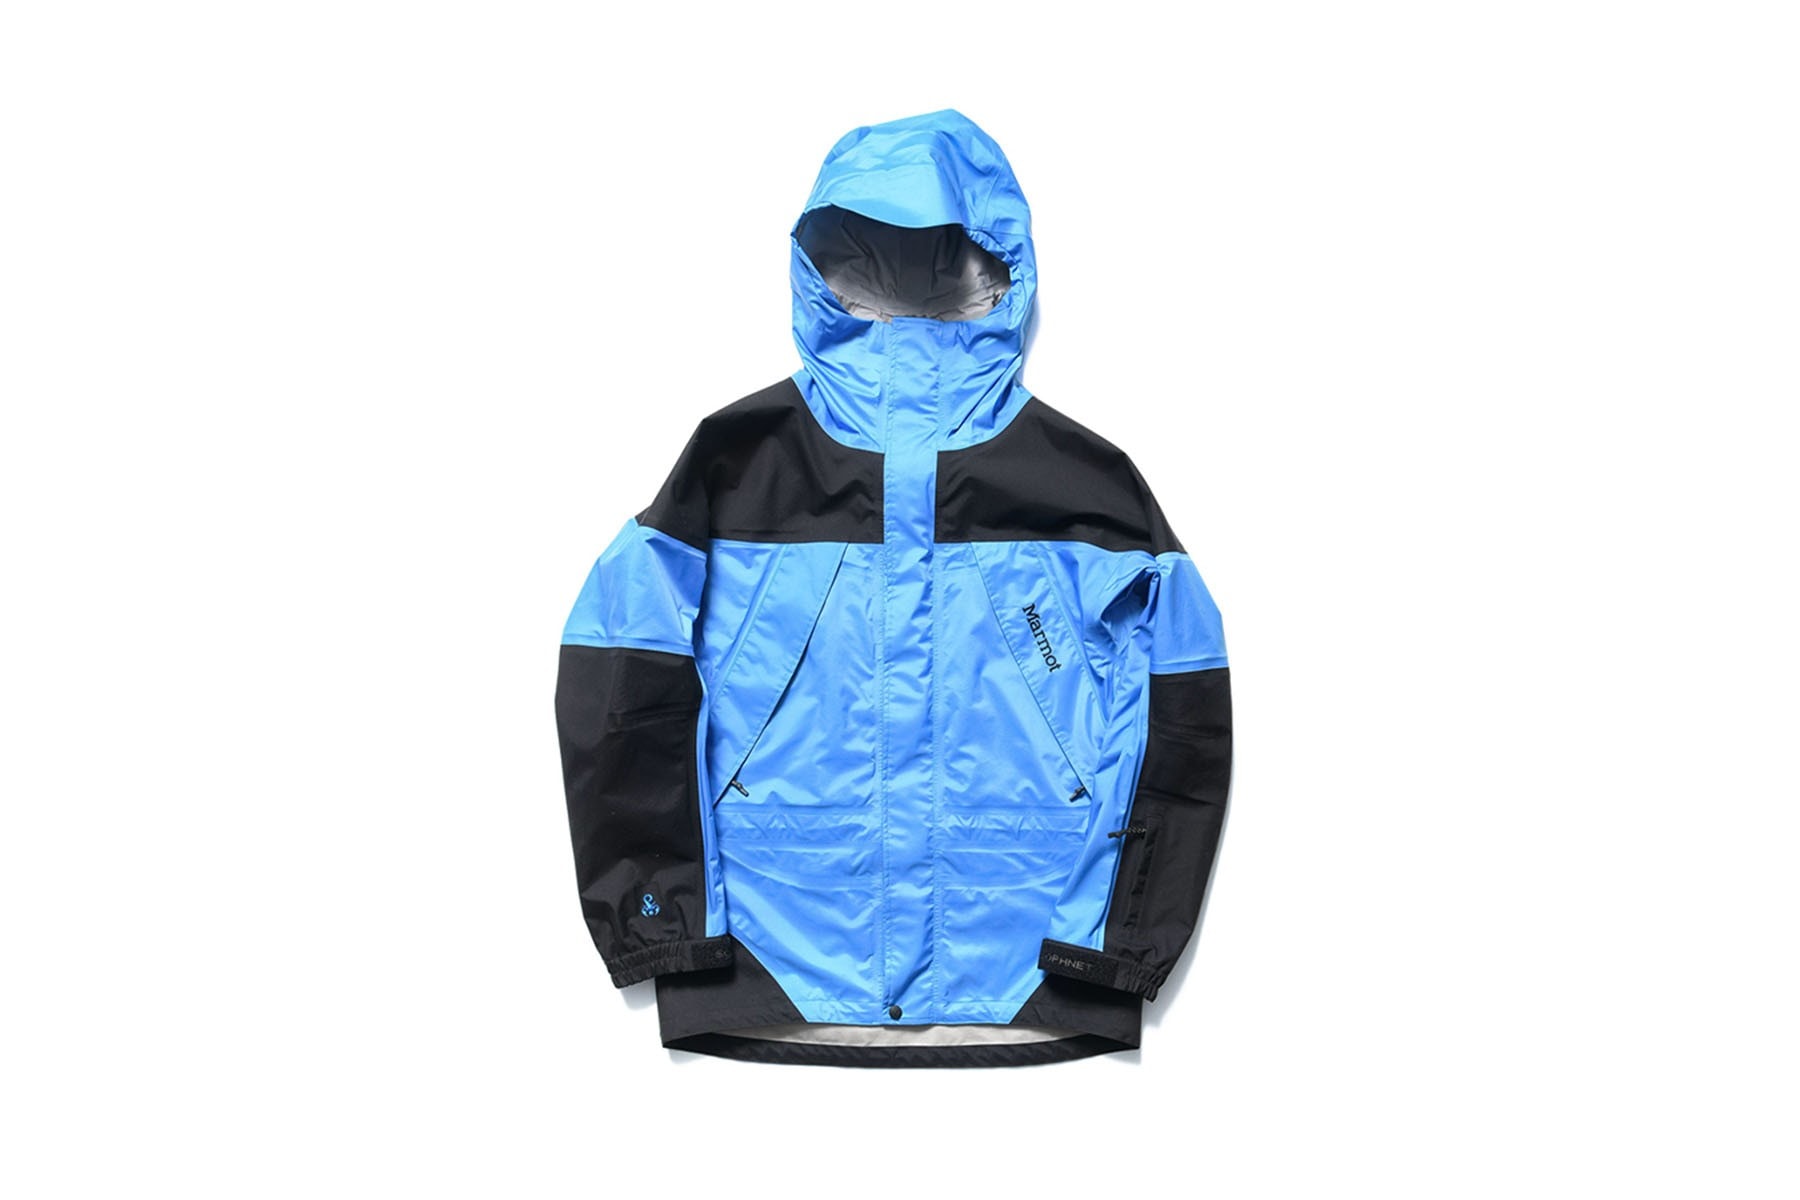 SOPHNET. x Marmot capsule collection Release Info fashion japan down jacket fleece jacket T-shirt blue black purple